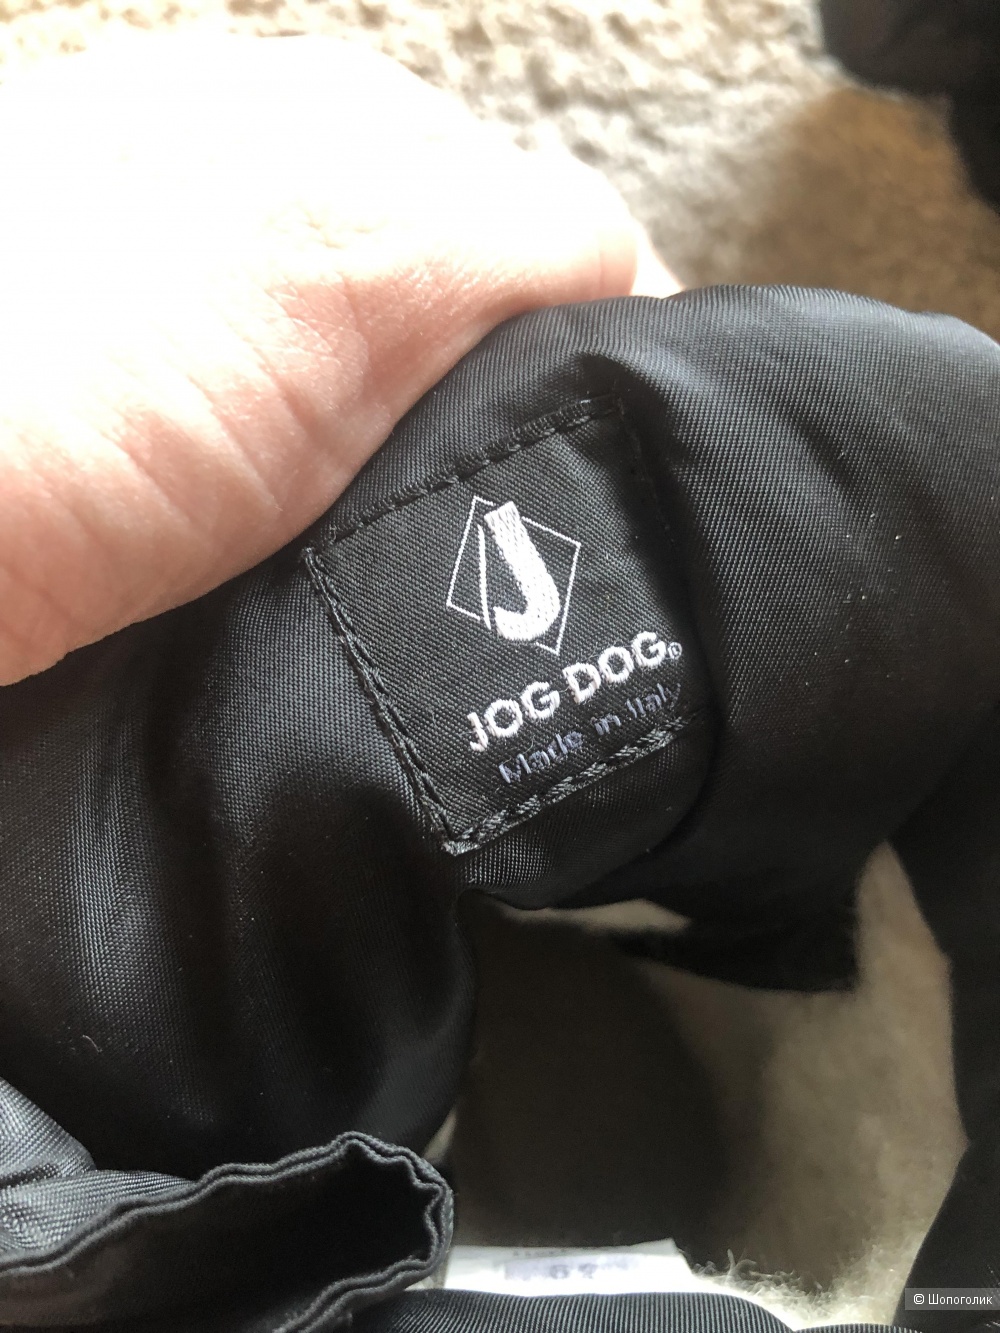 Ботинки JOG DOG walker pro, 39 размер